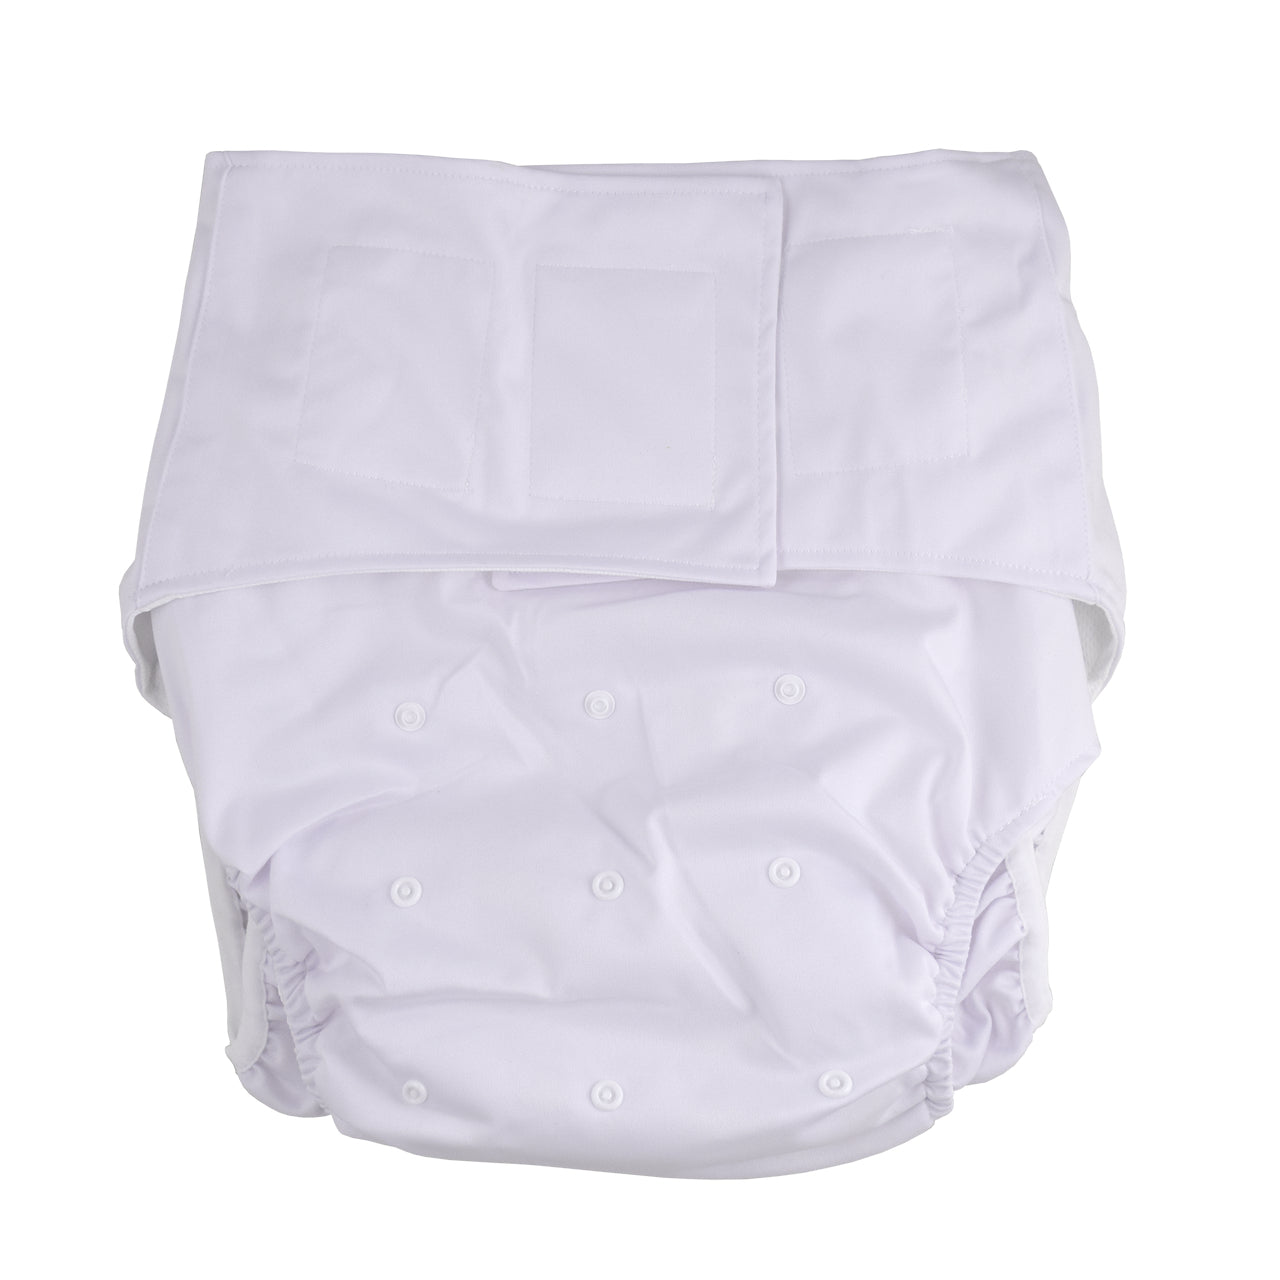 InControl - Adult Pocket Diaper - White